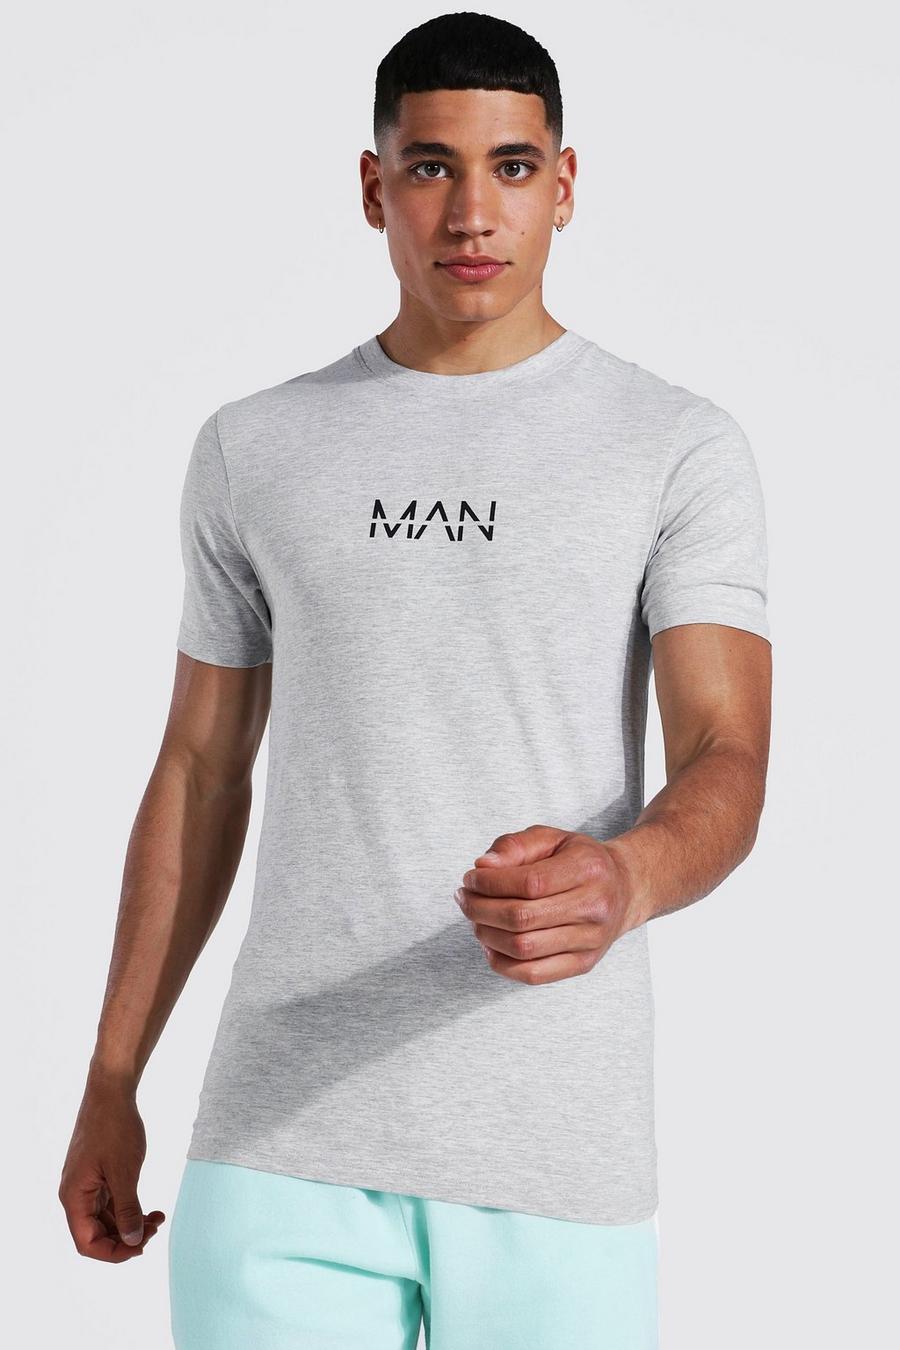 Camiseta MAN Original ajustada al músculo, Grey marl image number 1